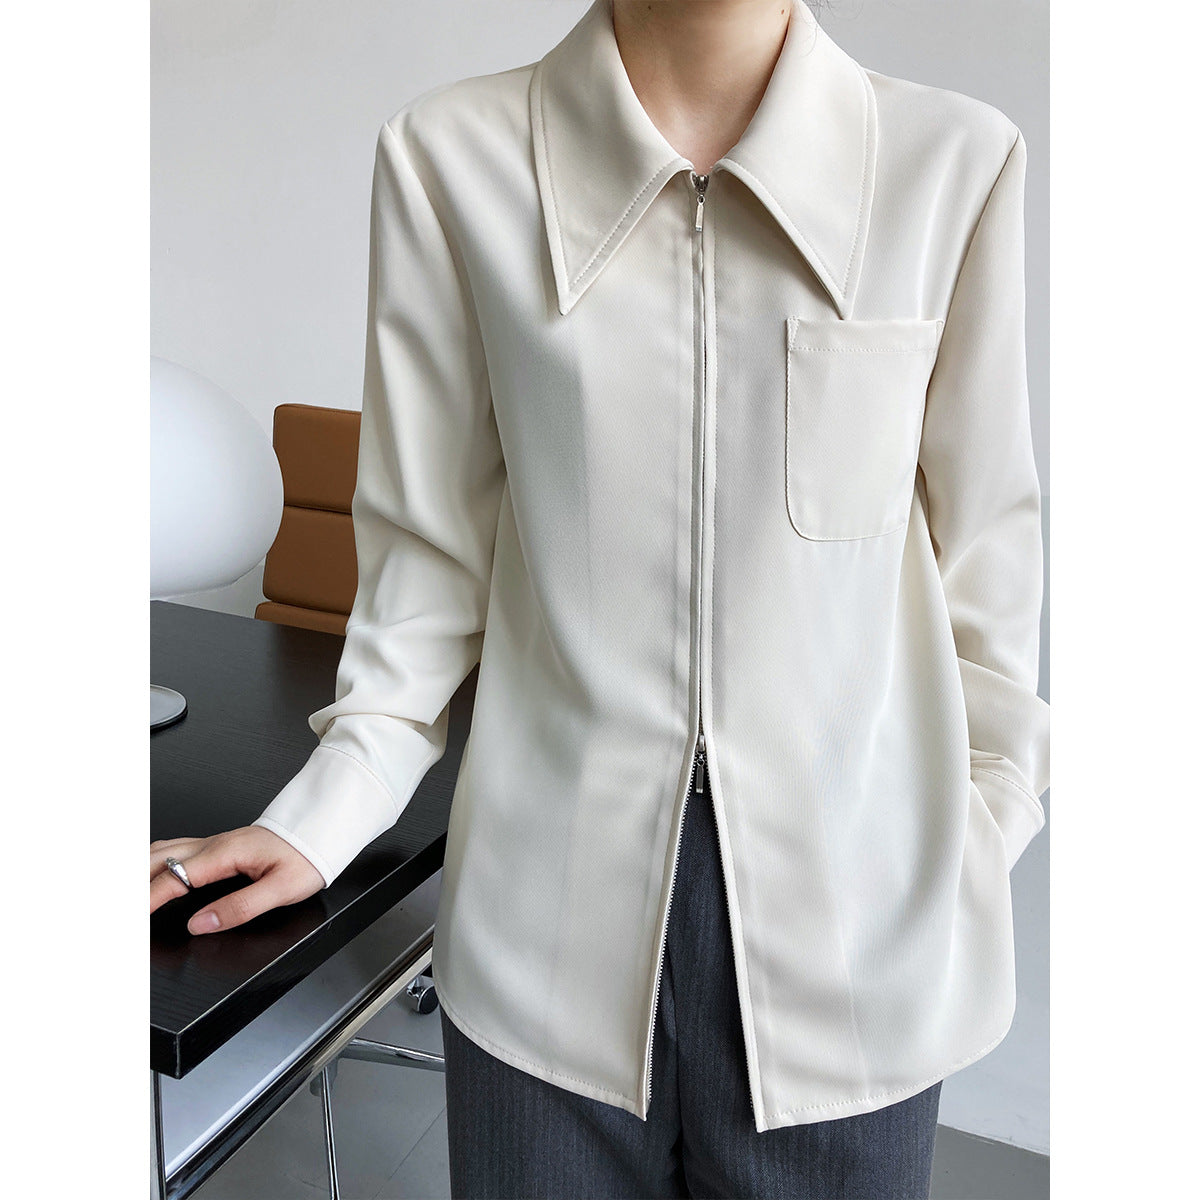 Elegant Designed Zipper Women Long Sleeves Shirts